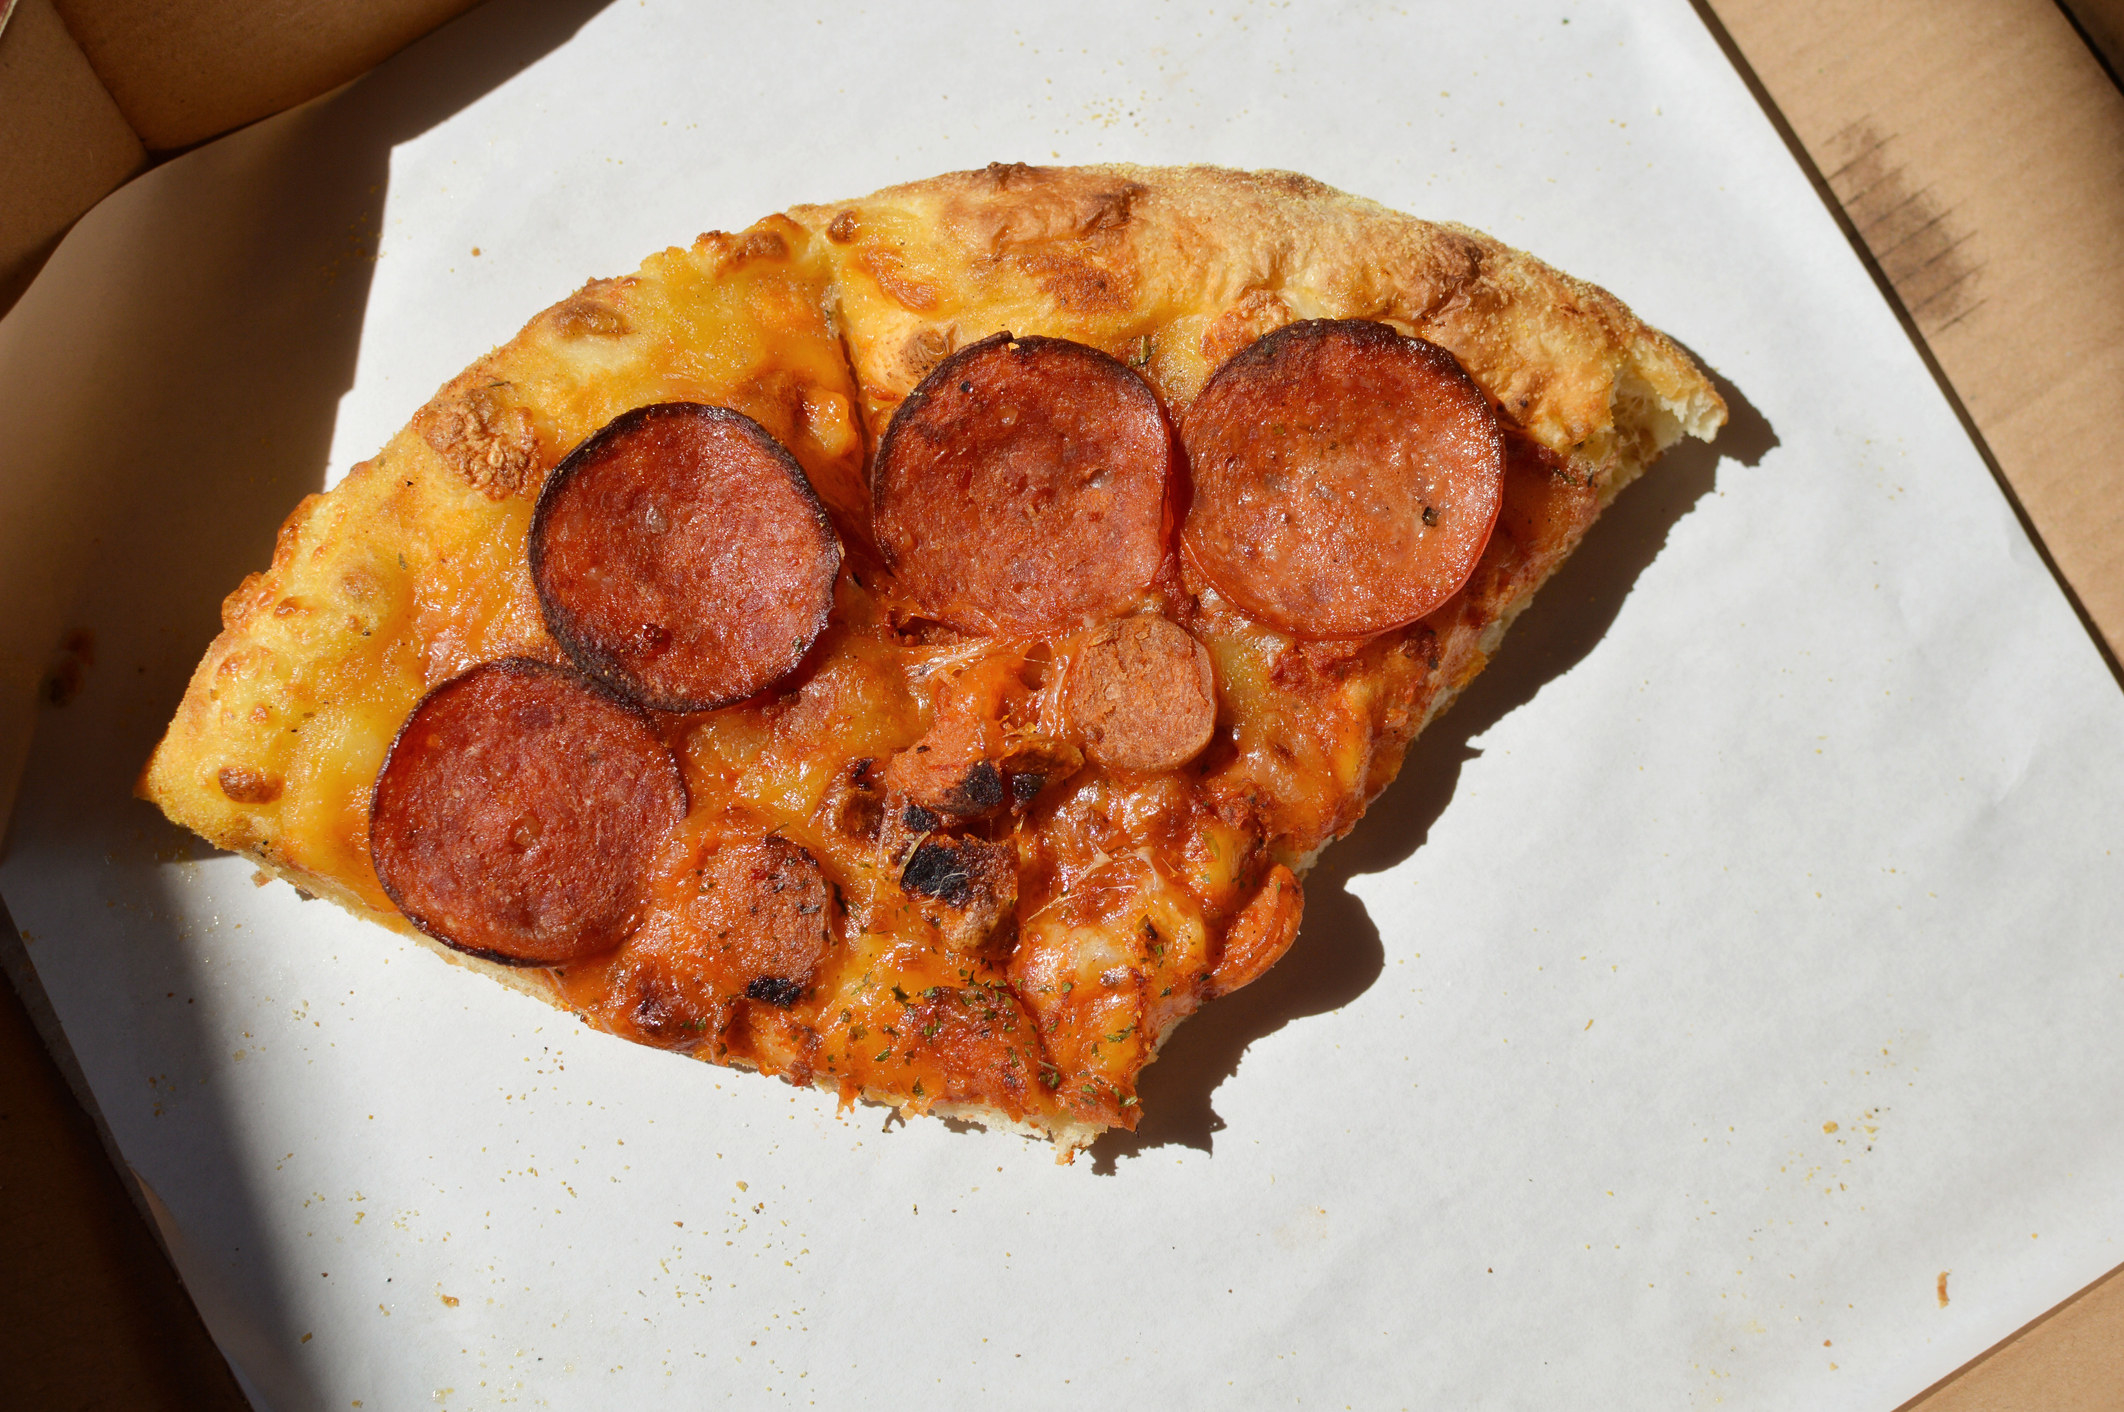 Leftover pepperoni pizza